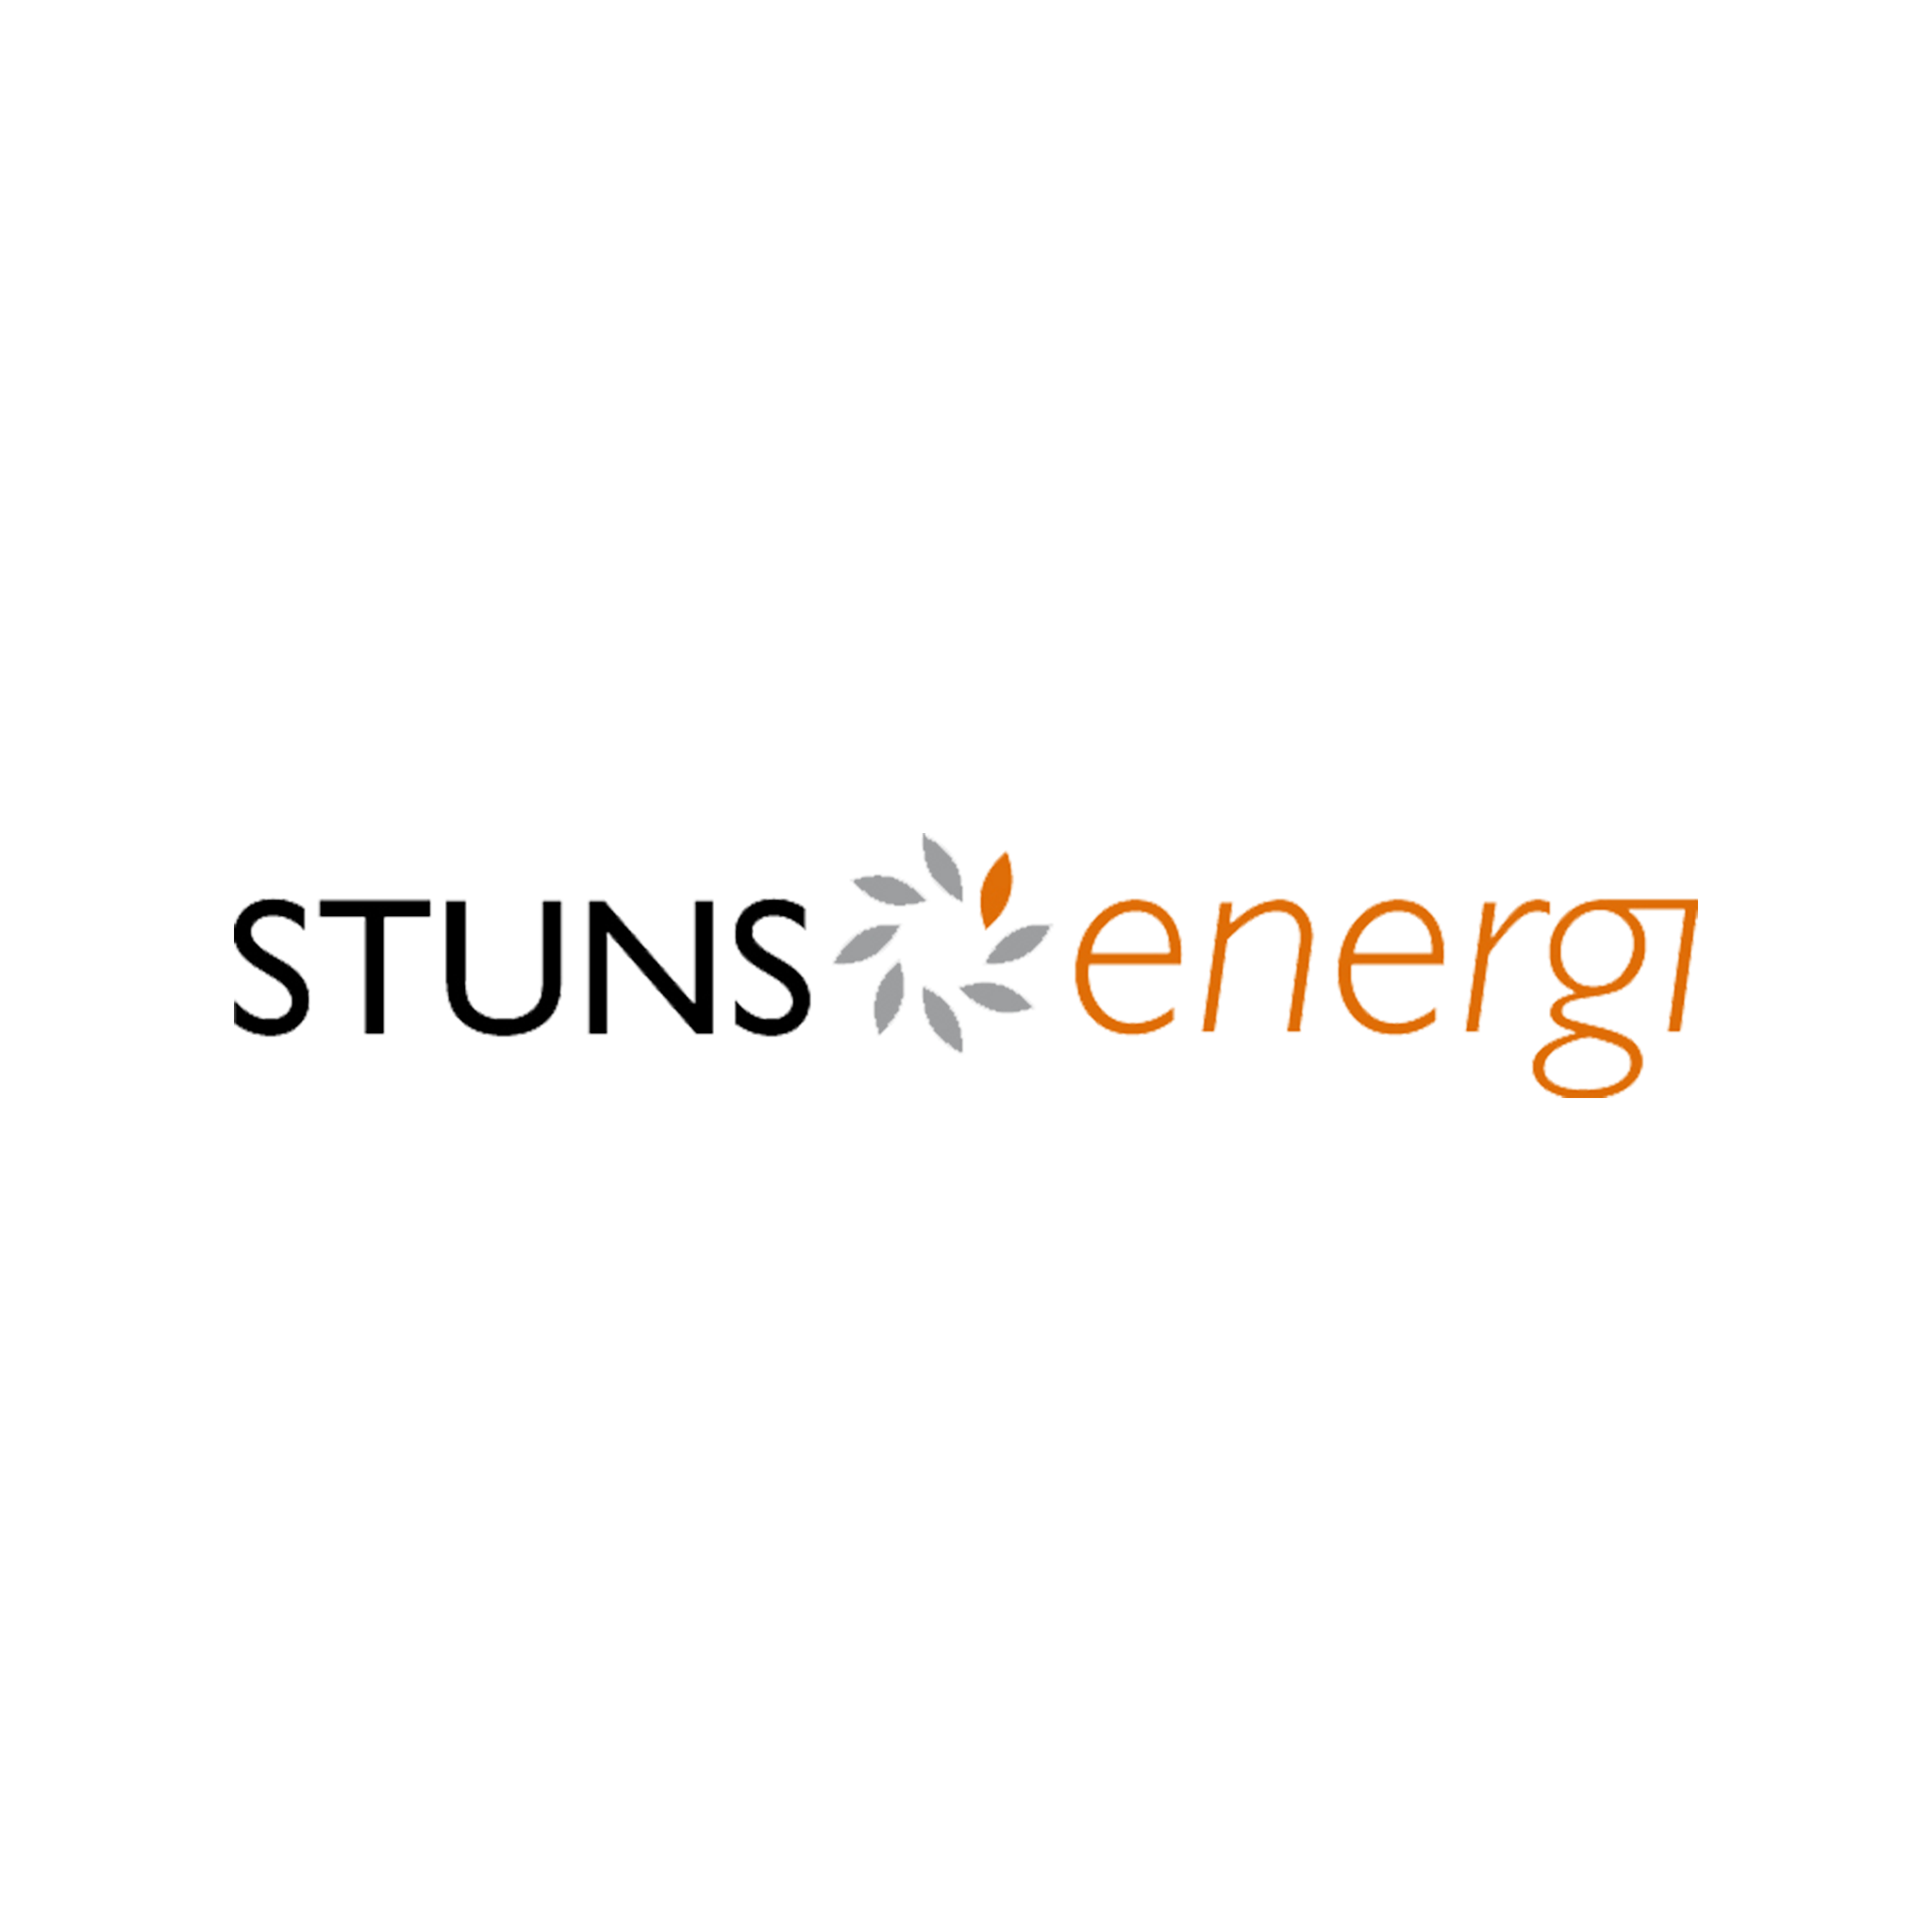 STUNS energi logo in black and orange